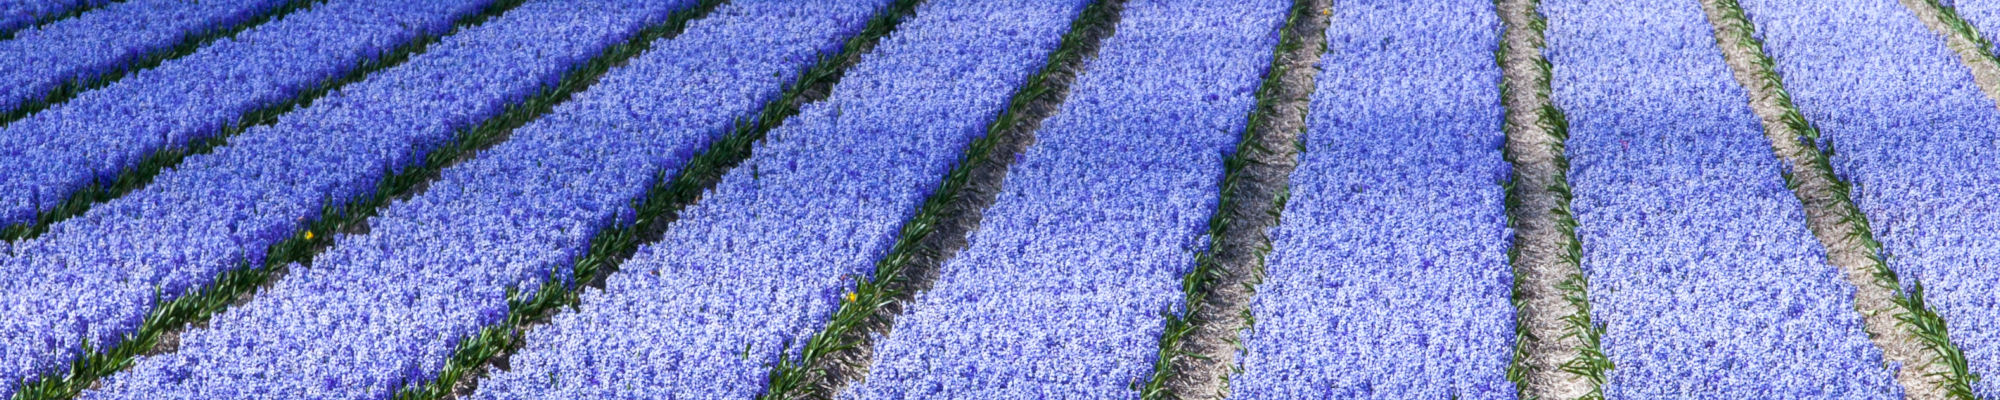 images/slides/hyacinths-lisse-keukenhof.jpg